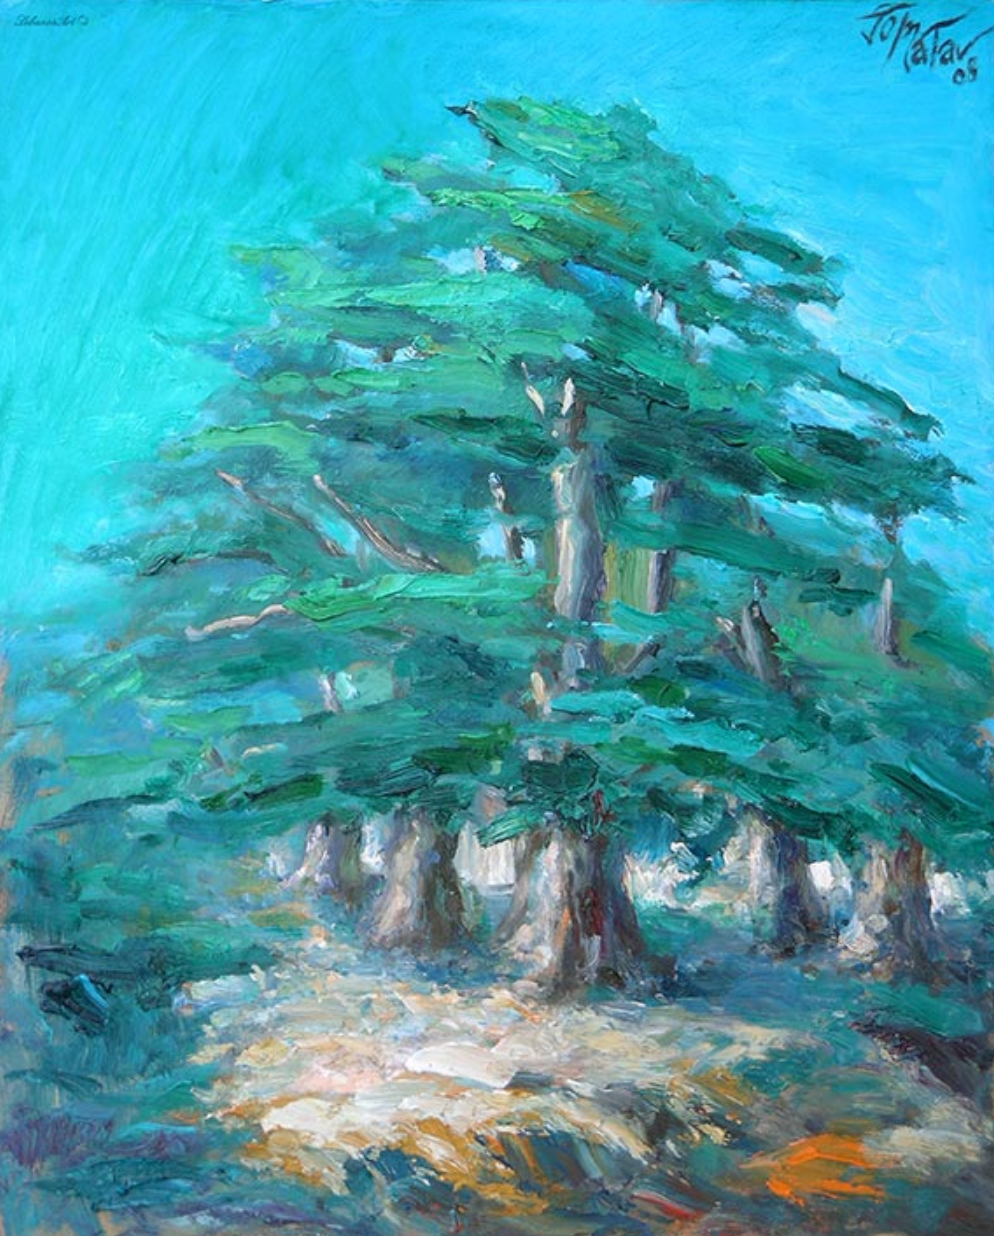 Cèdre du Liban – Cedar of Lebanon